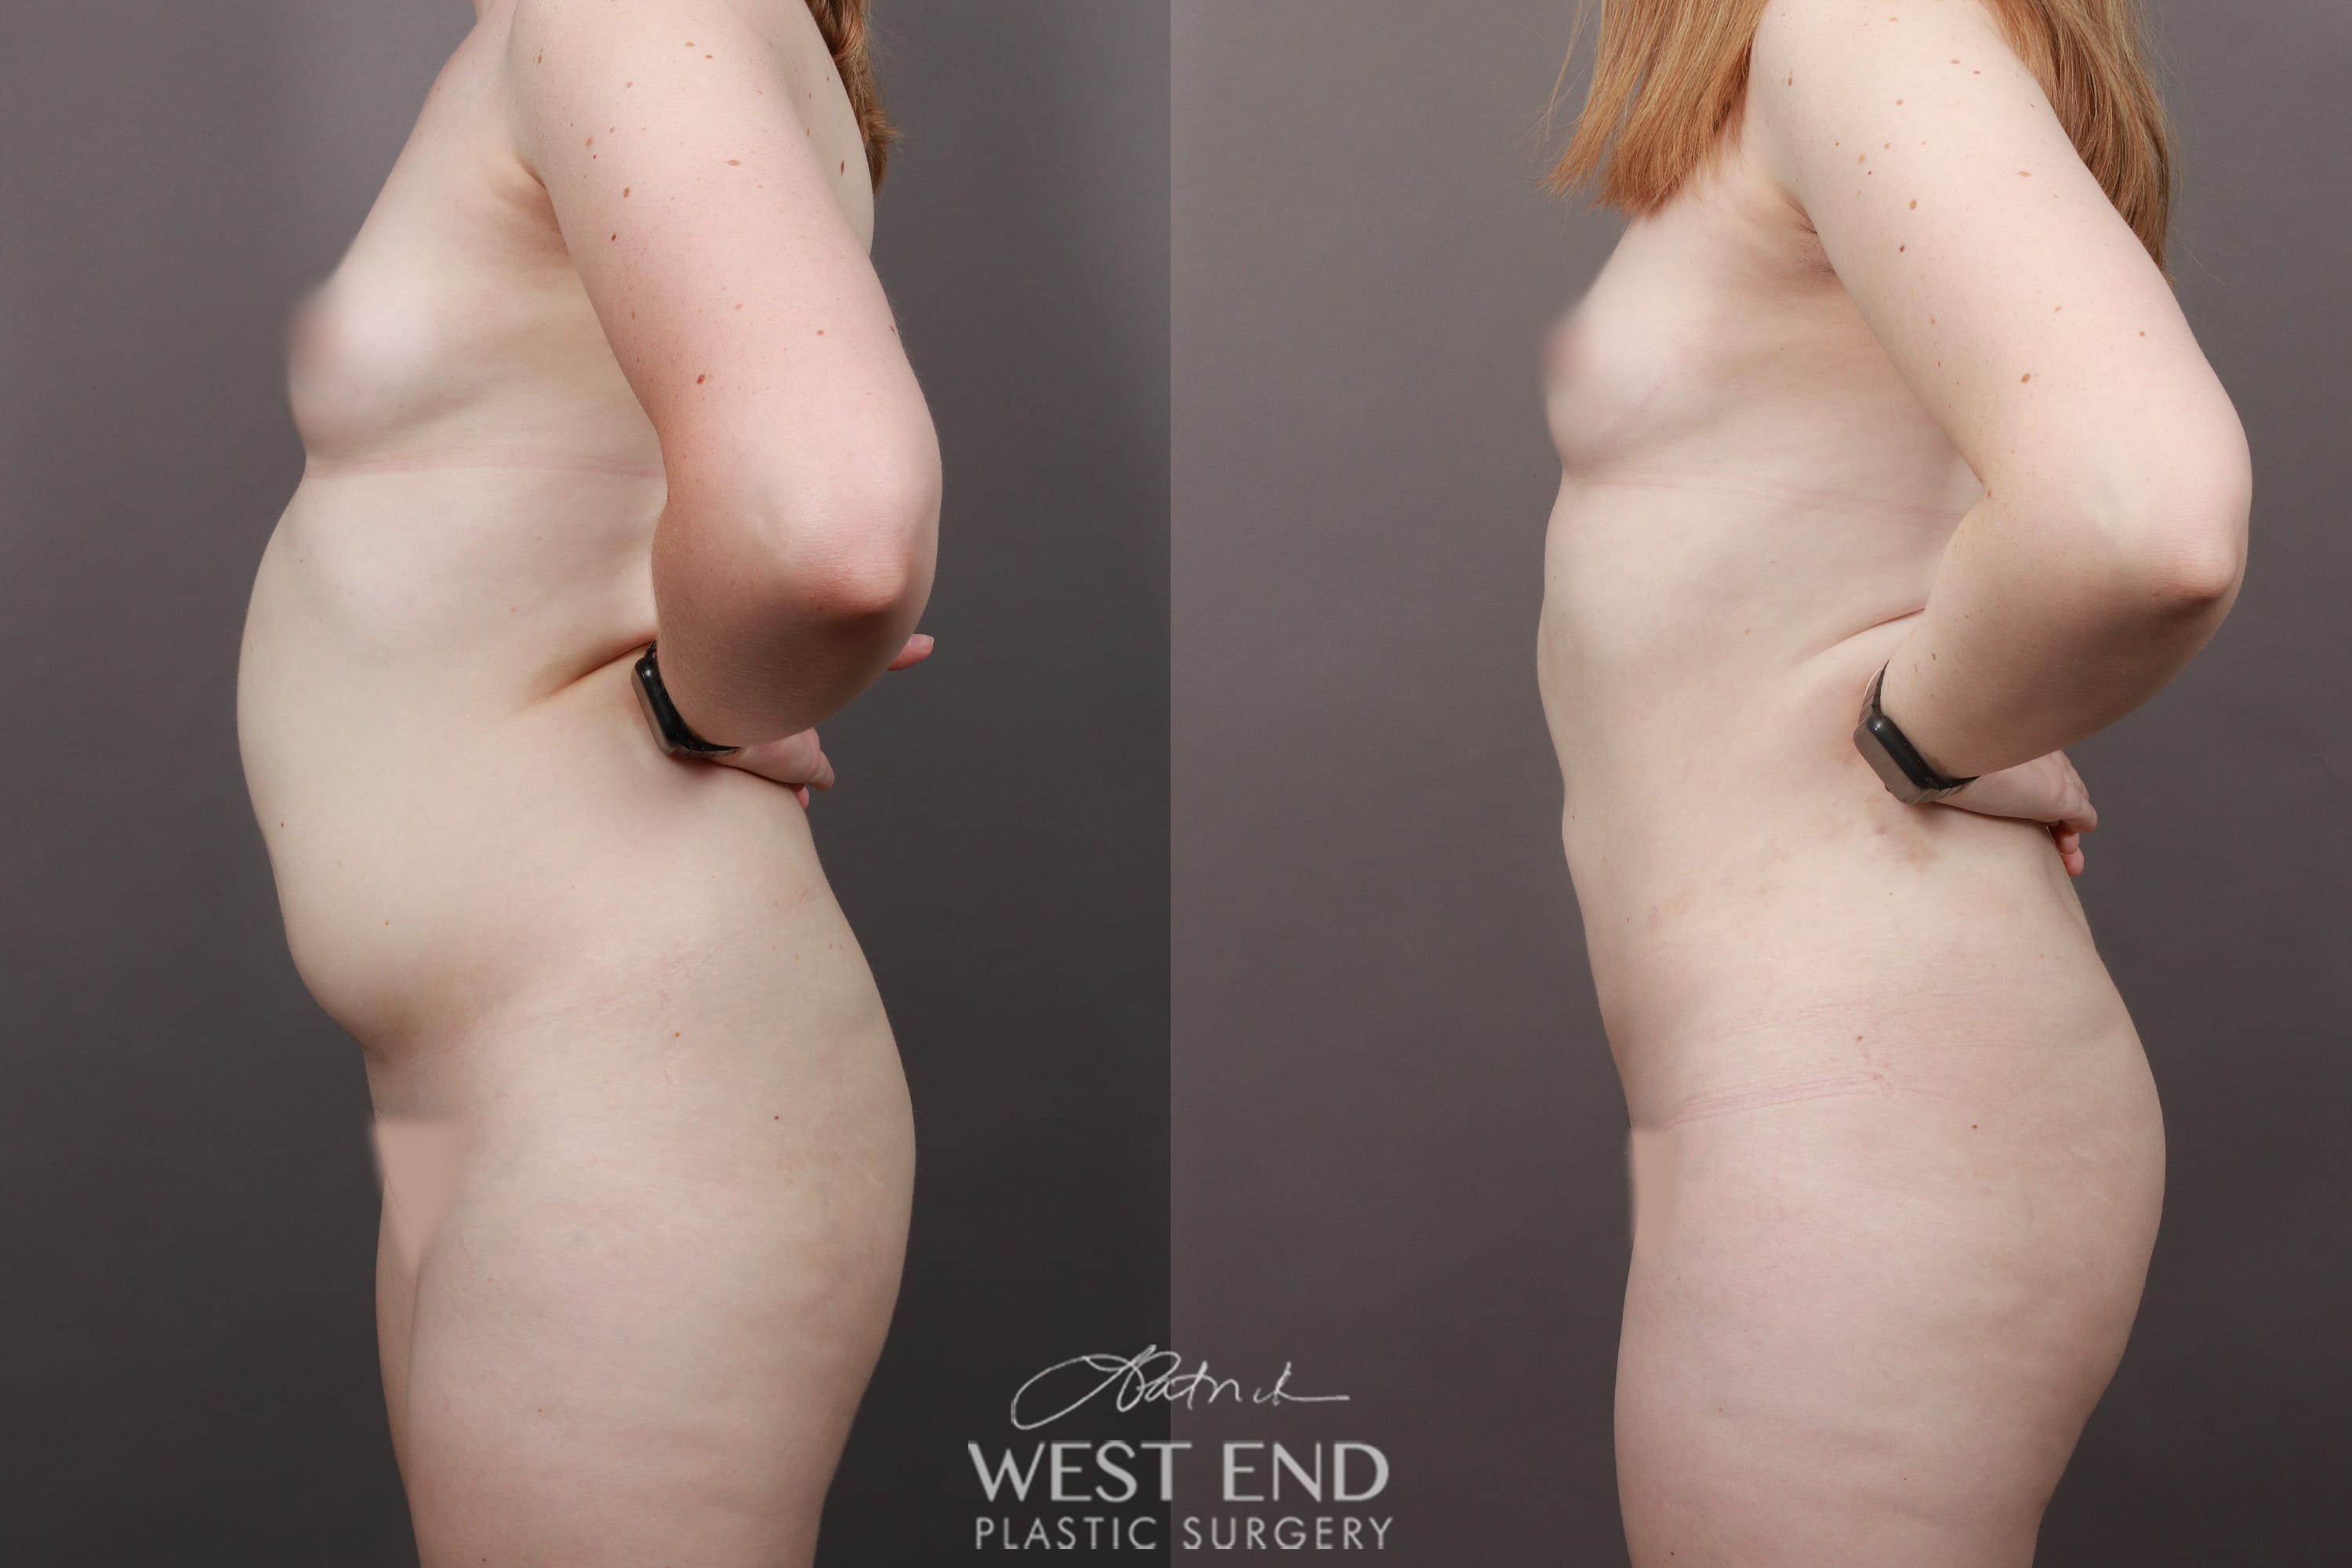 Liposuction (5 Months Post-Op)